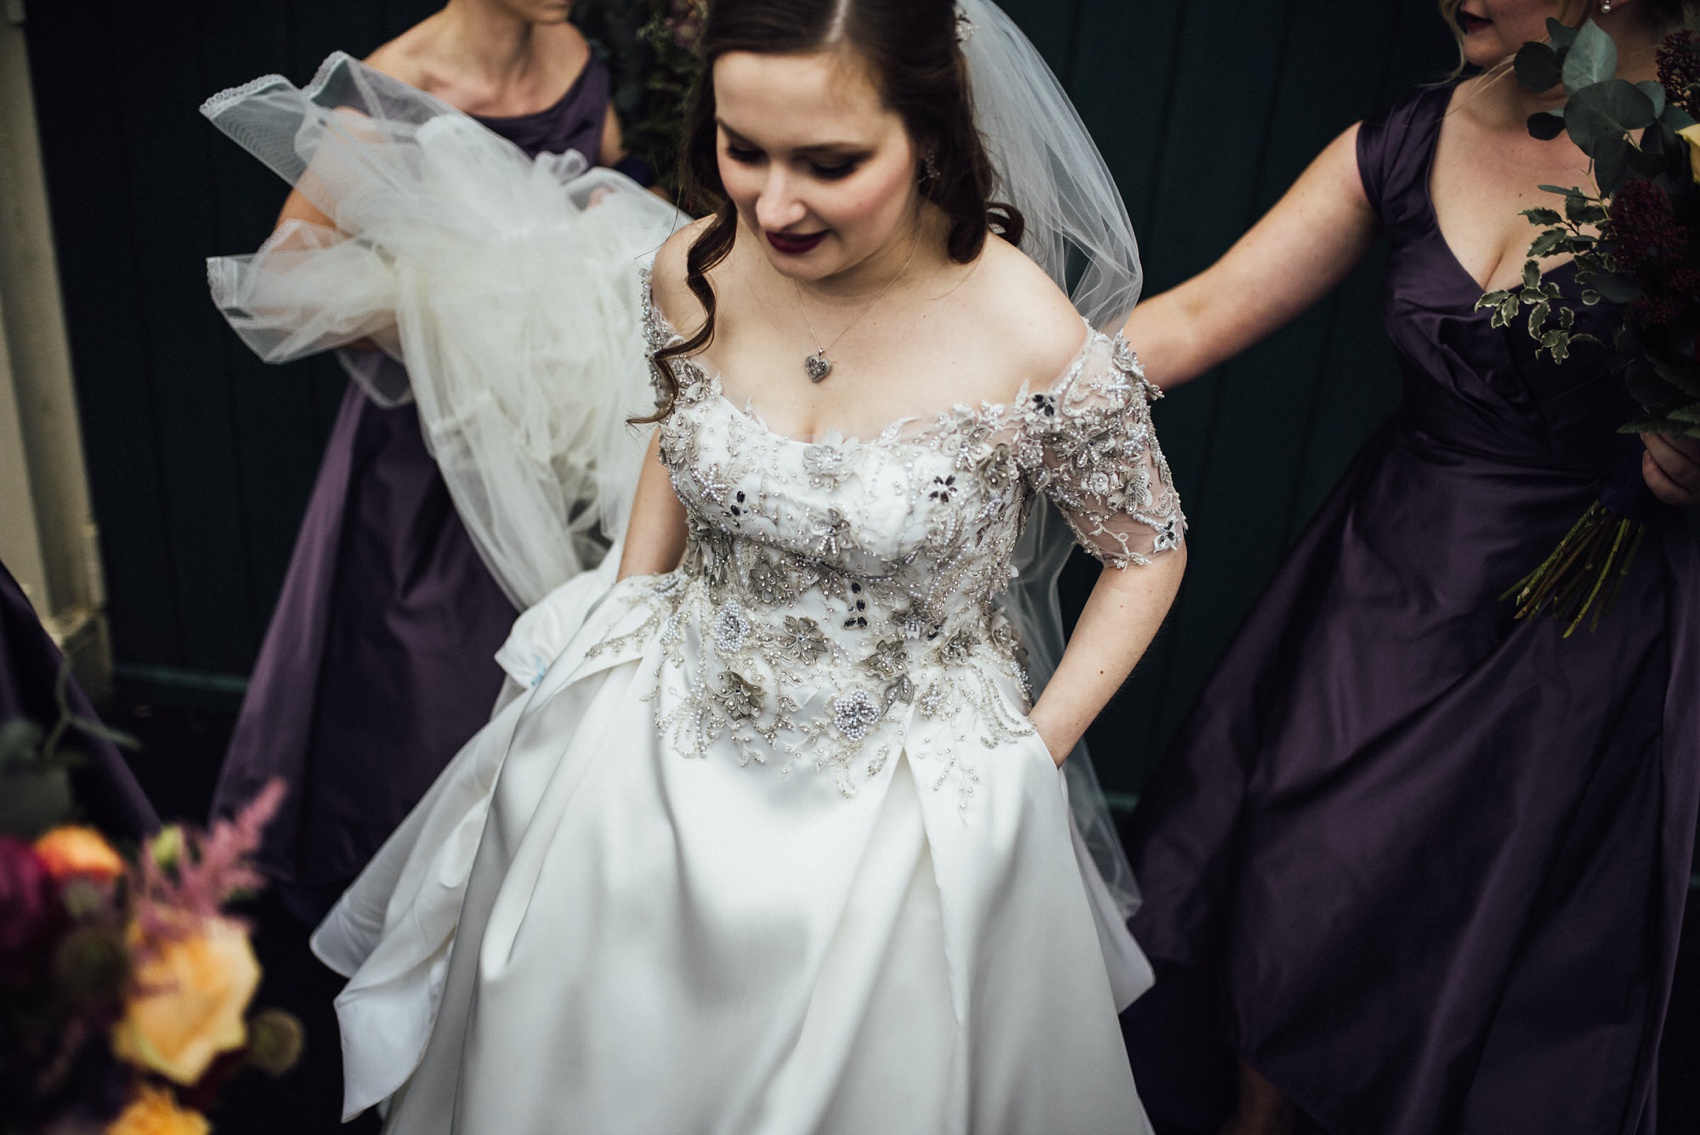 13 Bride made her own wedding dress